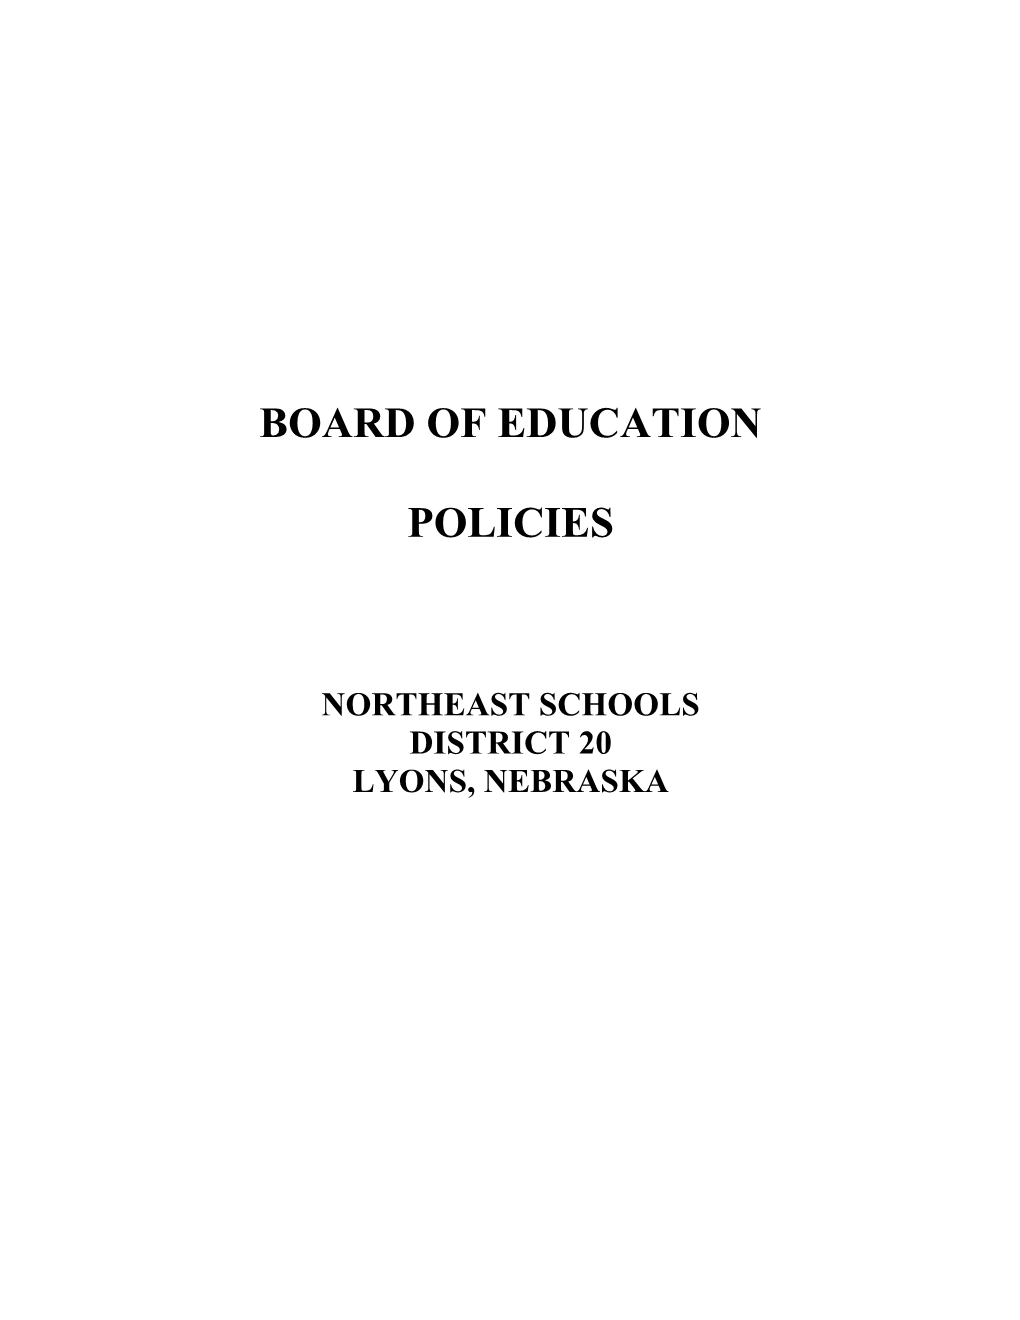 Board of Education s7